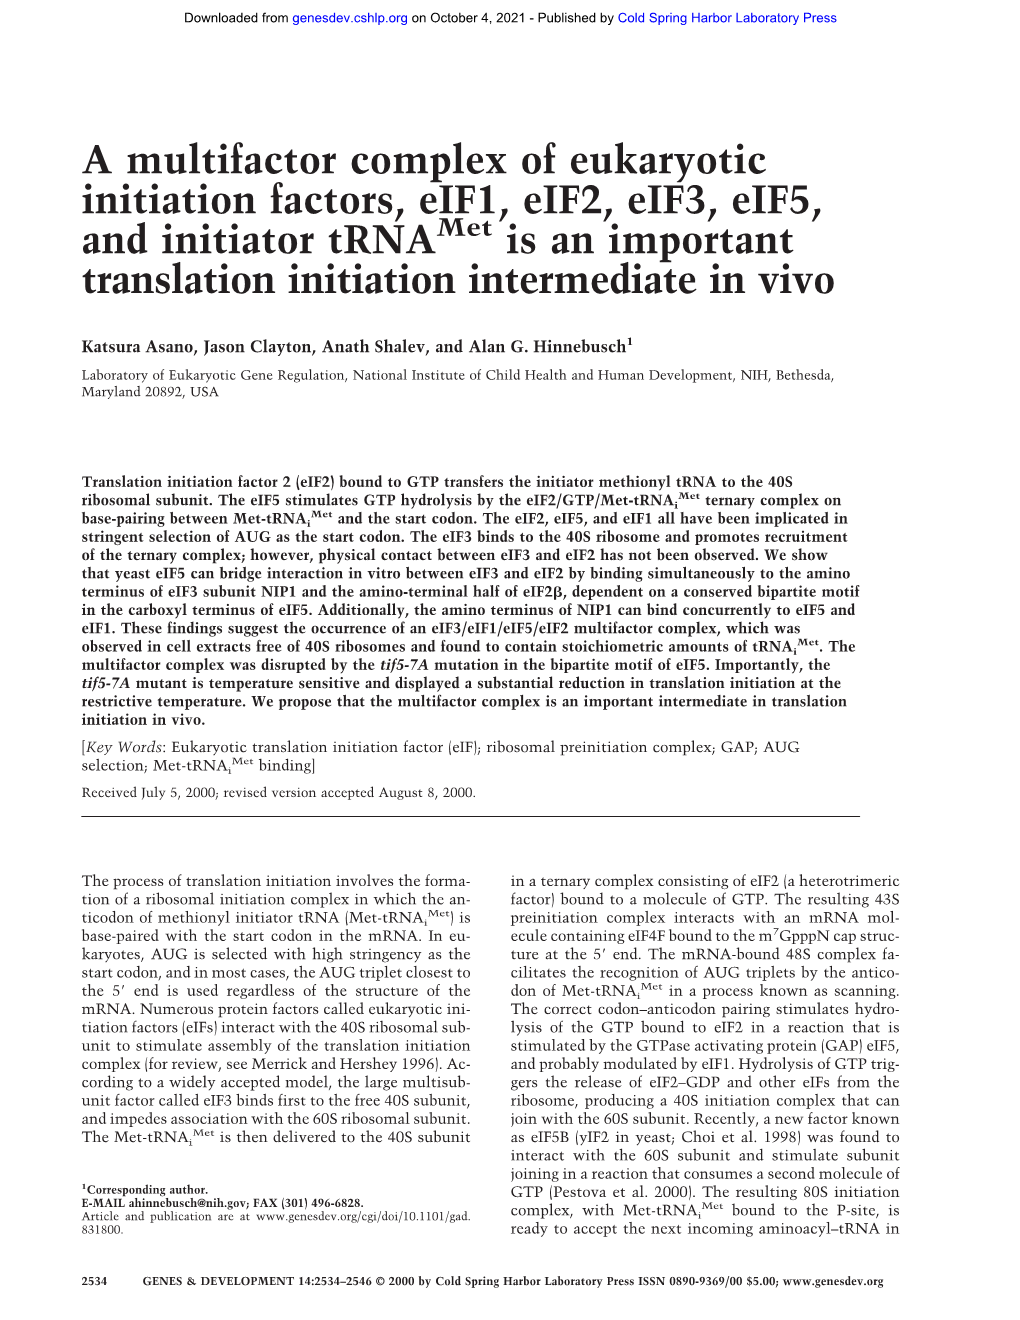 A Multifactor Complex of Eukaryotic Initiation Factors, Eif1, Eif2, Eif3, Eif5, and Initiator Trna Is an Important Translation I